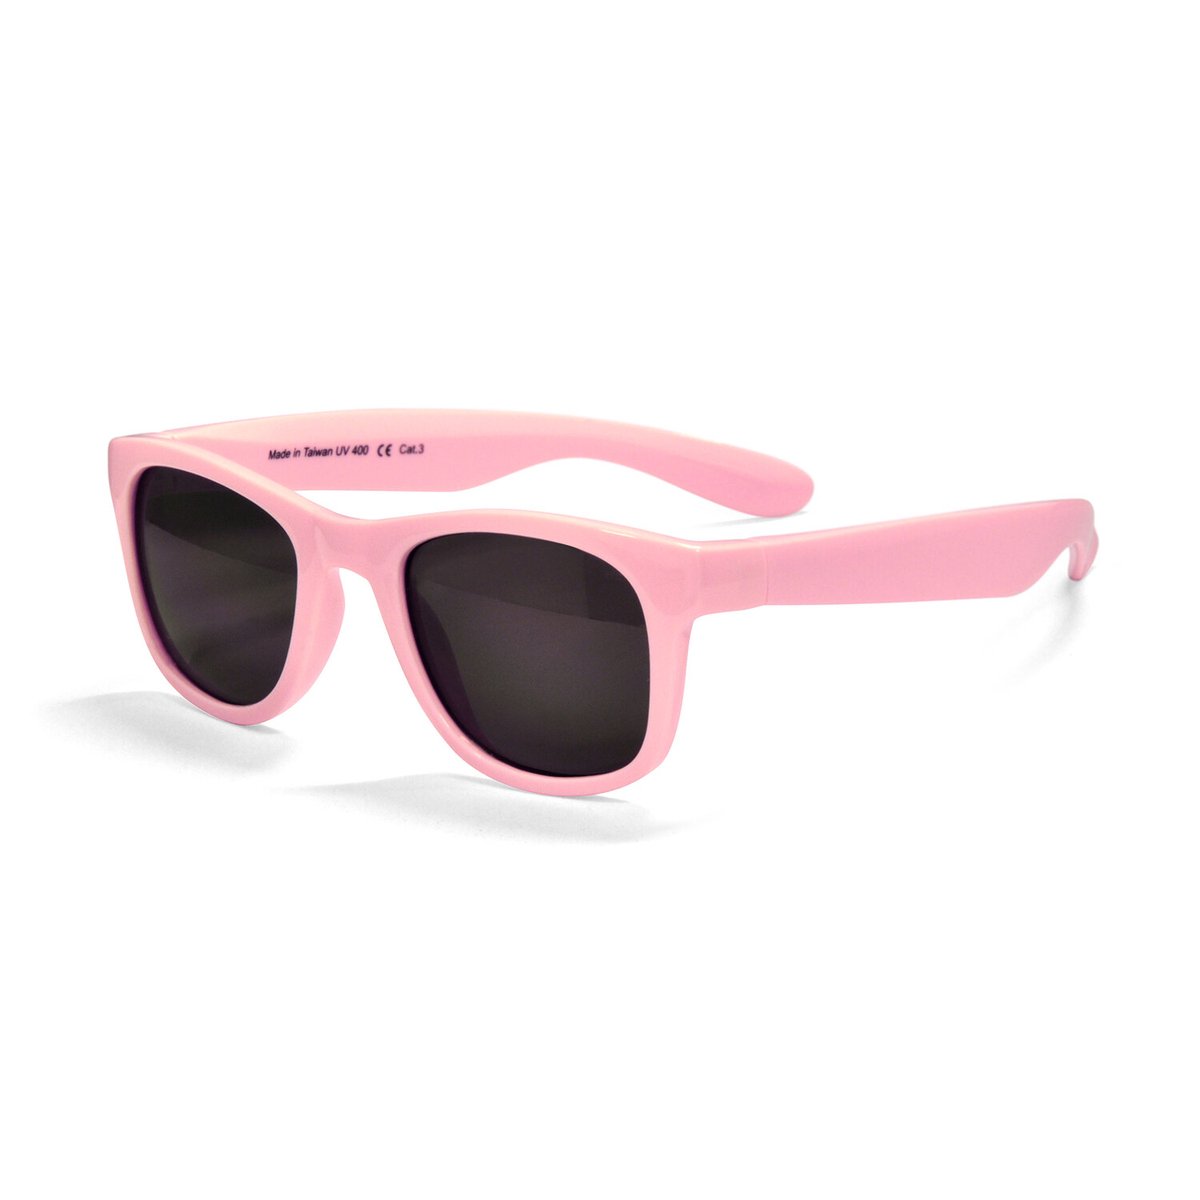 Real Shades - UV-zonnebril voor kinderen - Surf - Dusty Roze - maat Onesize (0-2yrs)